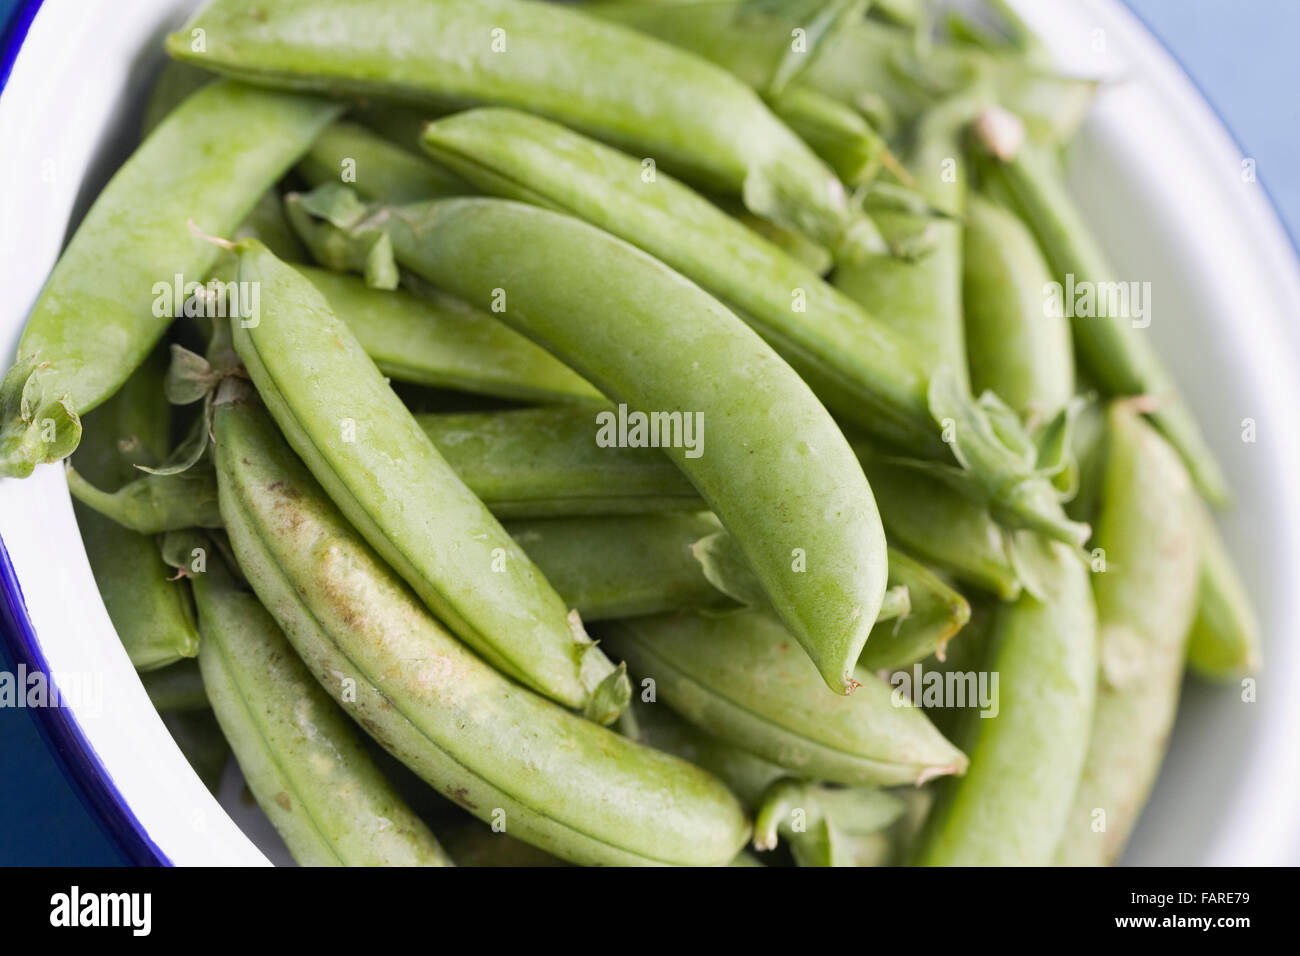 Pisum sativum var. macrocarpon. Freshly picked sugar snap peas in an enamel colander. Stock Photo